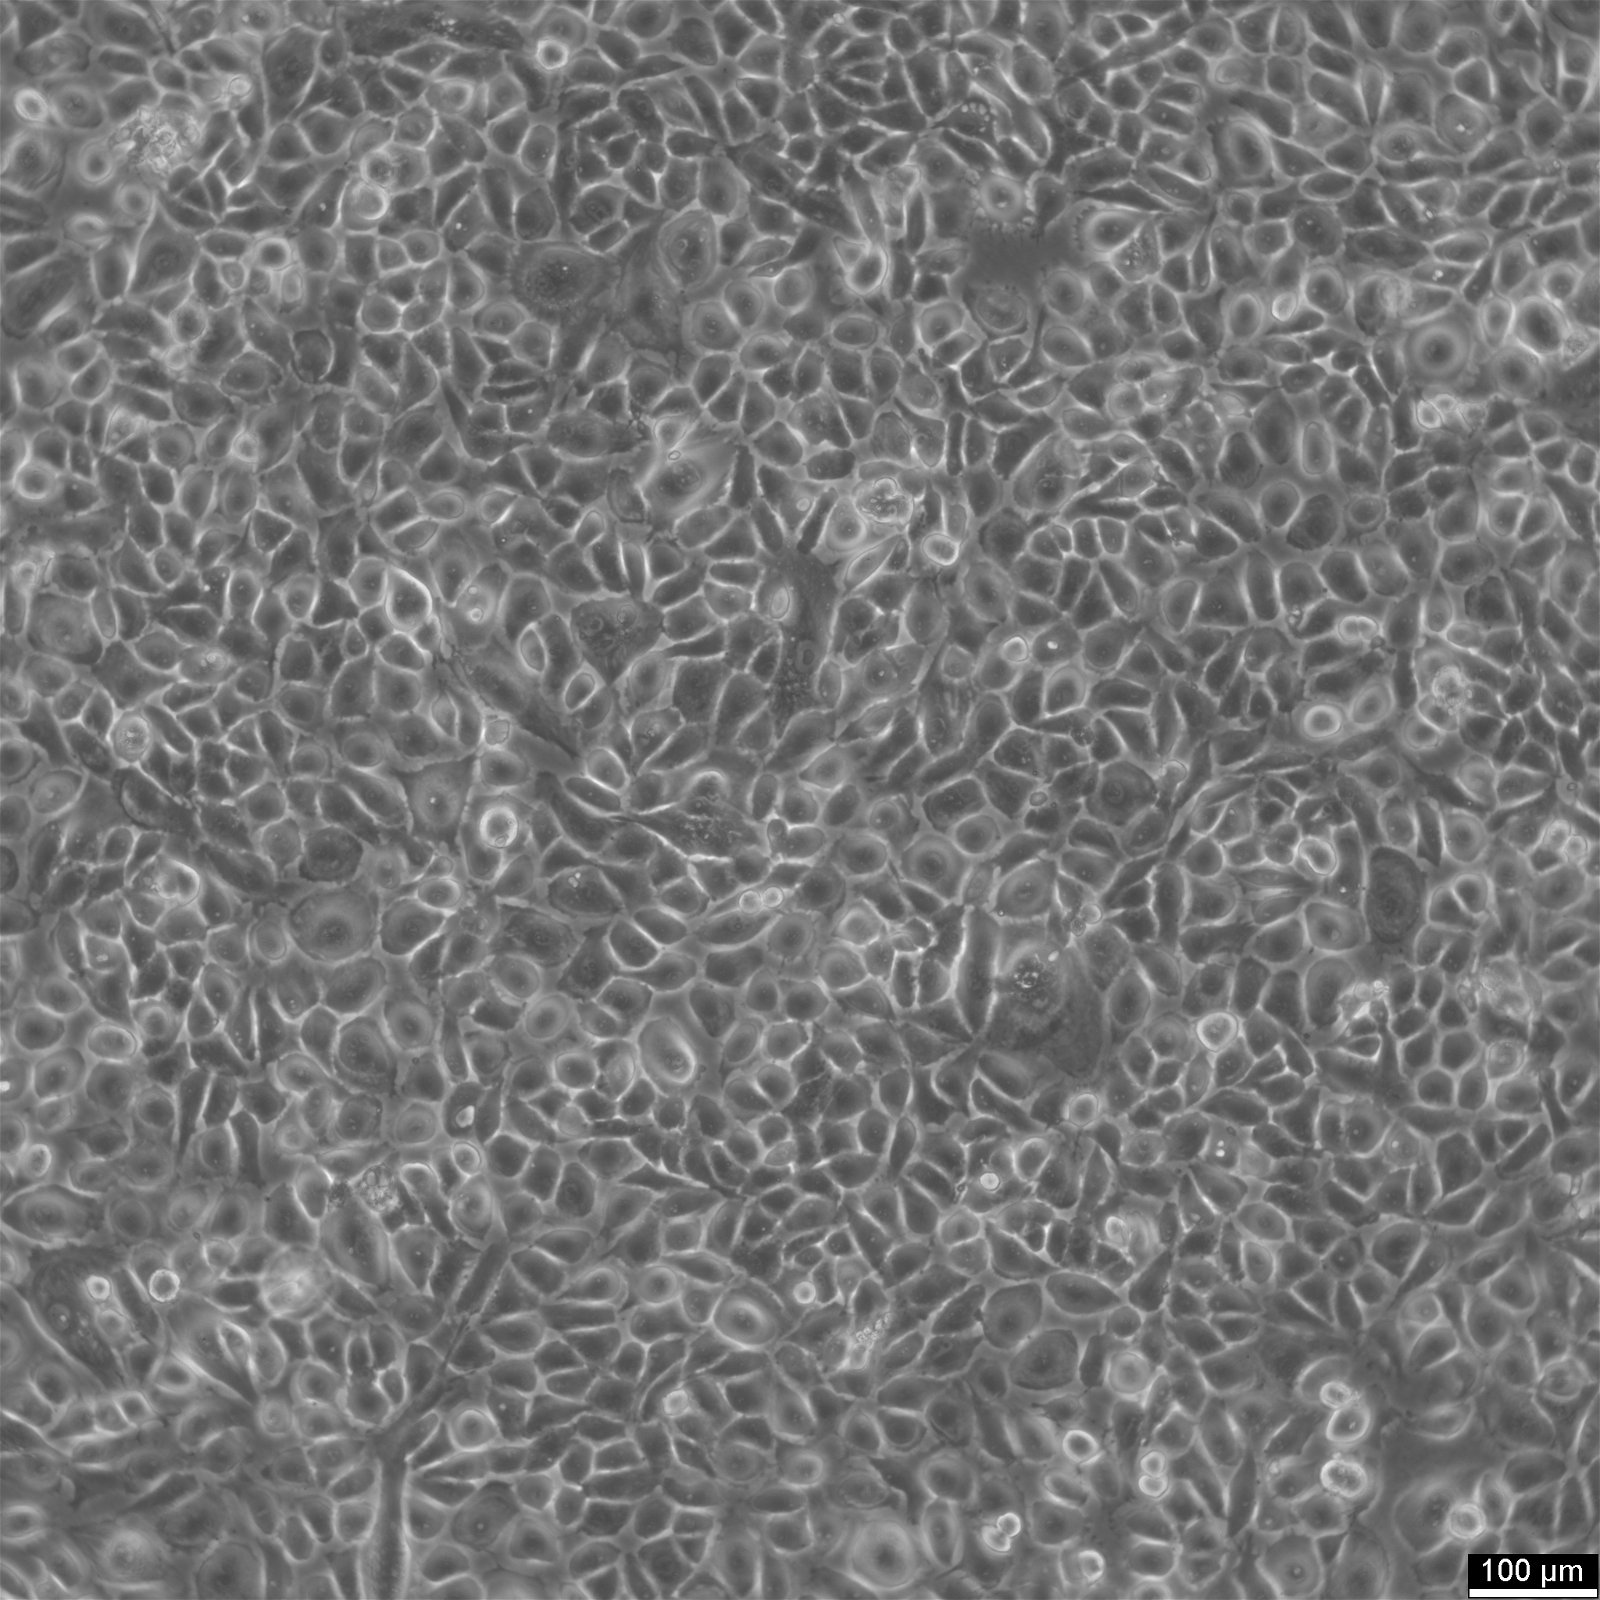 NCI-H226 Cells